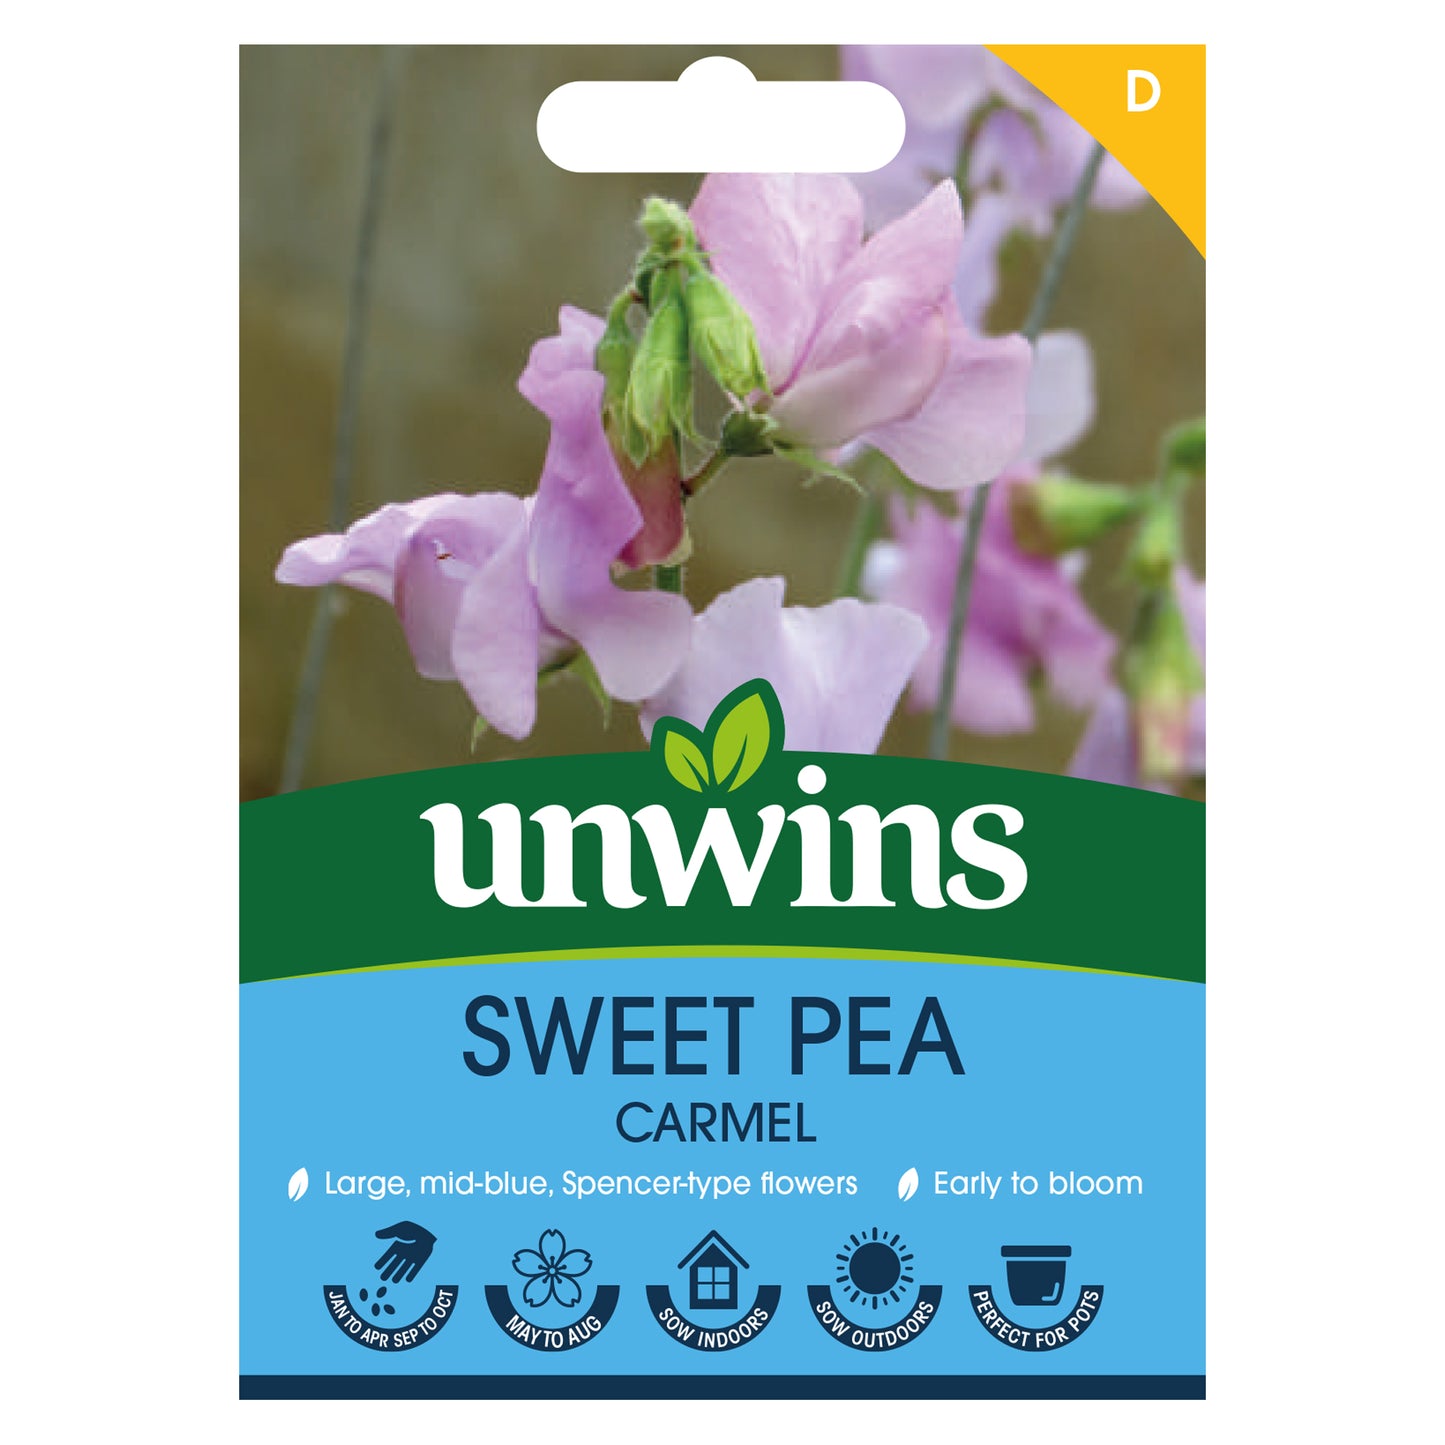 Unwins Sweet Pea Carmel Seeds front of pack